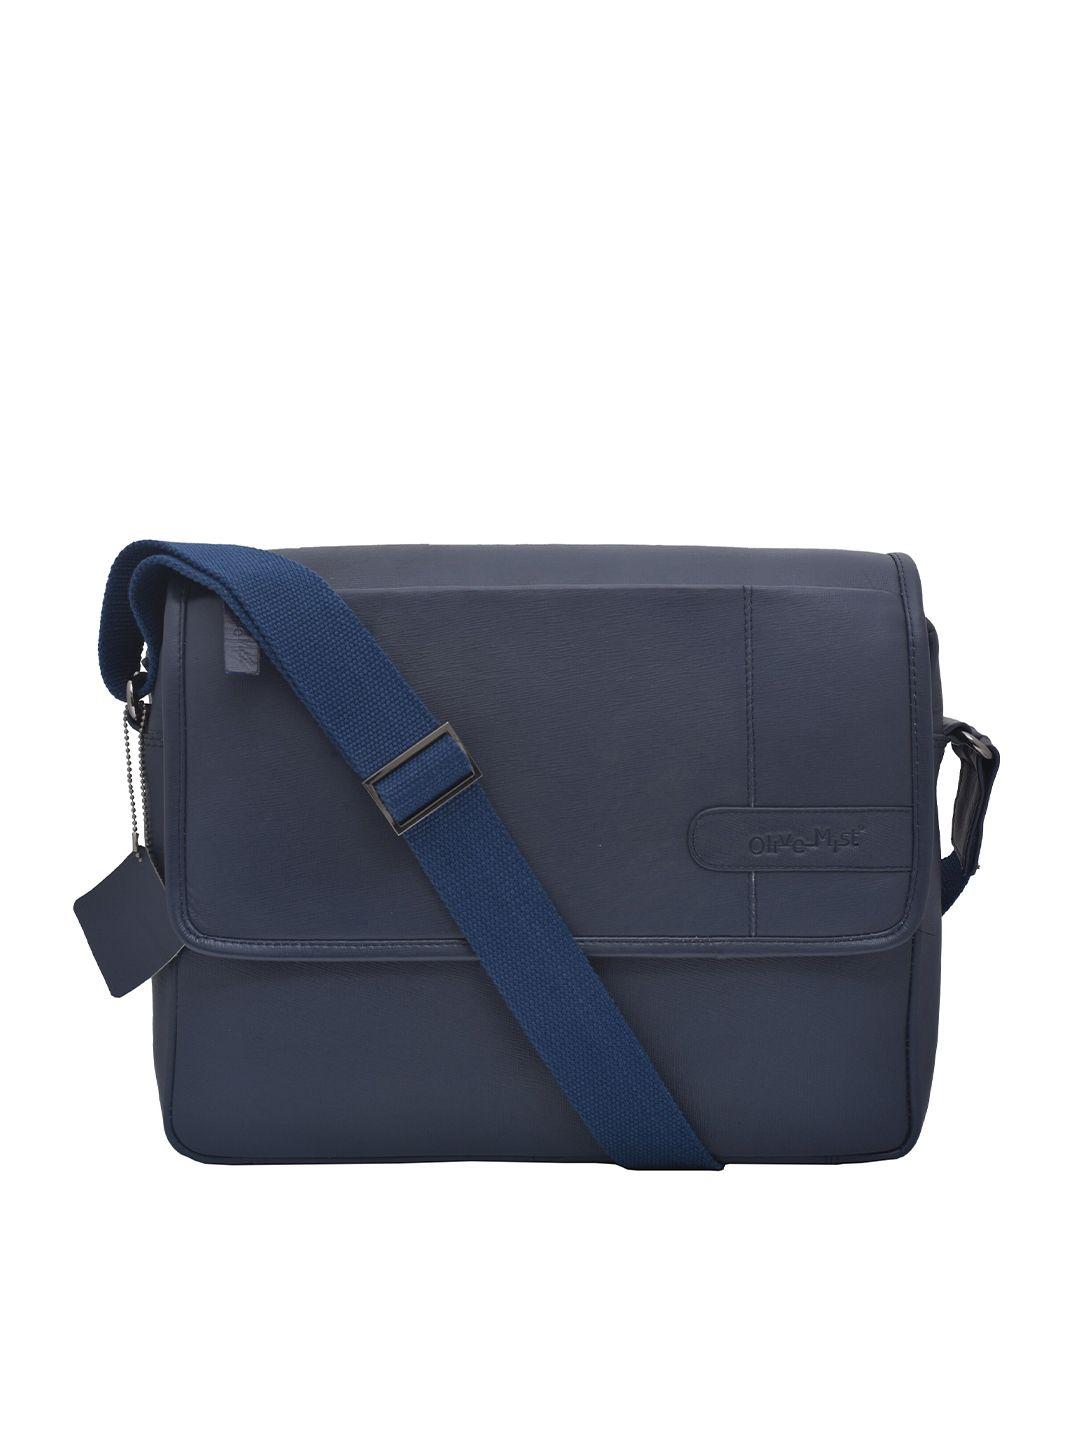 olive mist adult blue textured pure leather laptop bag